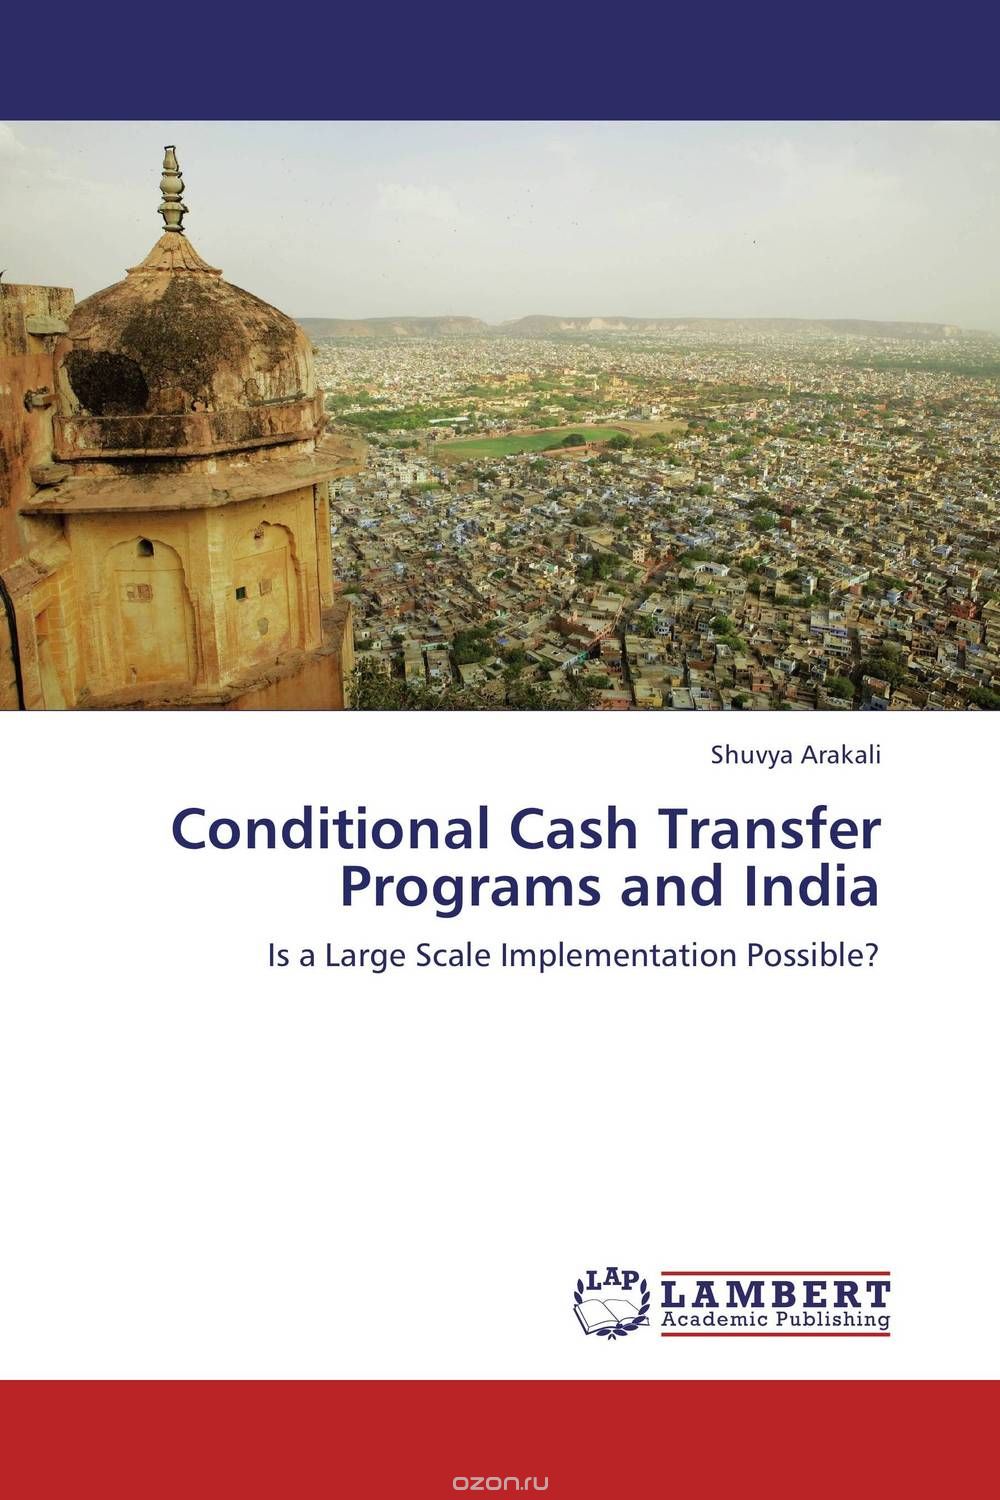 Скачать книгу "Conditional Cash Transfer Programs and India"